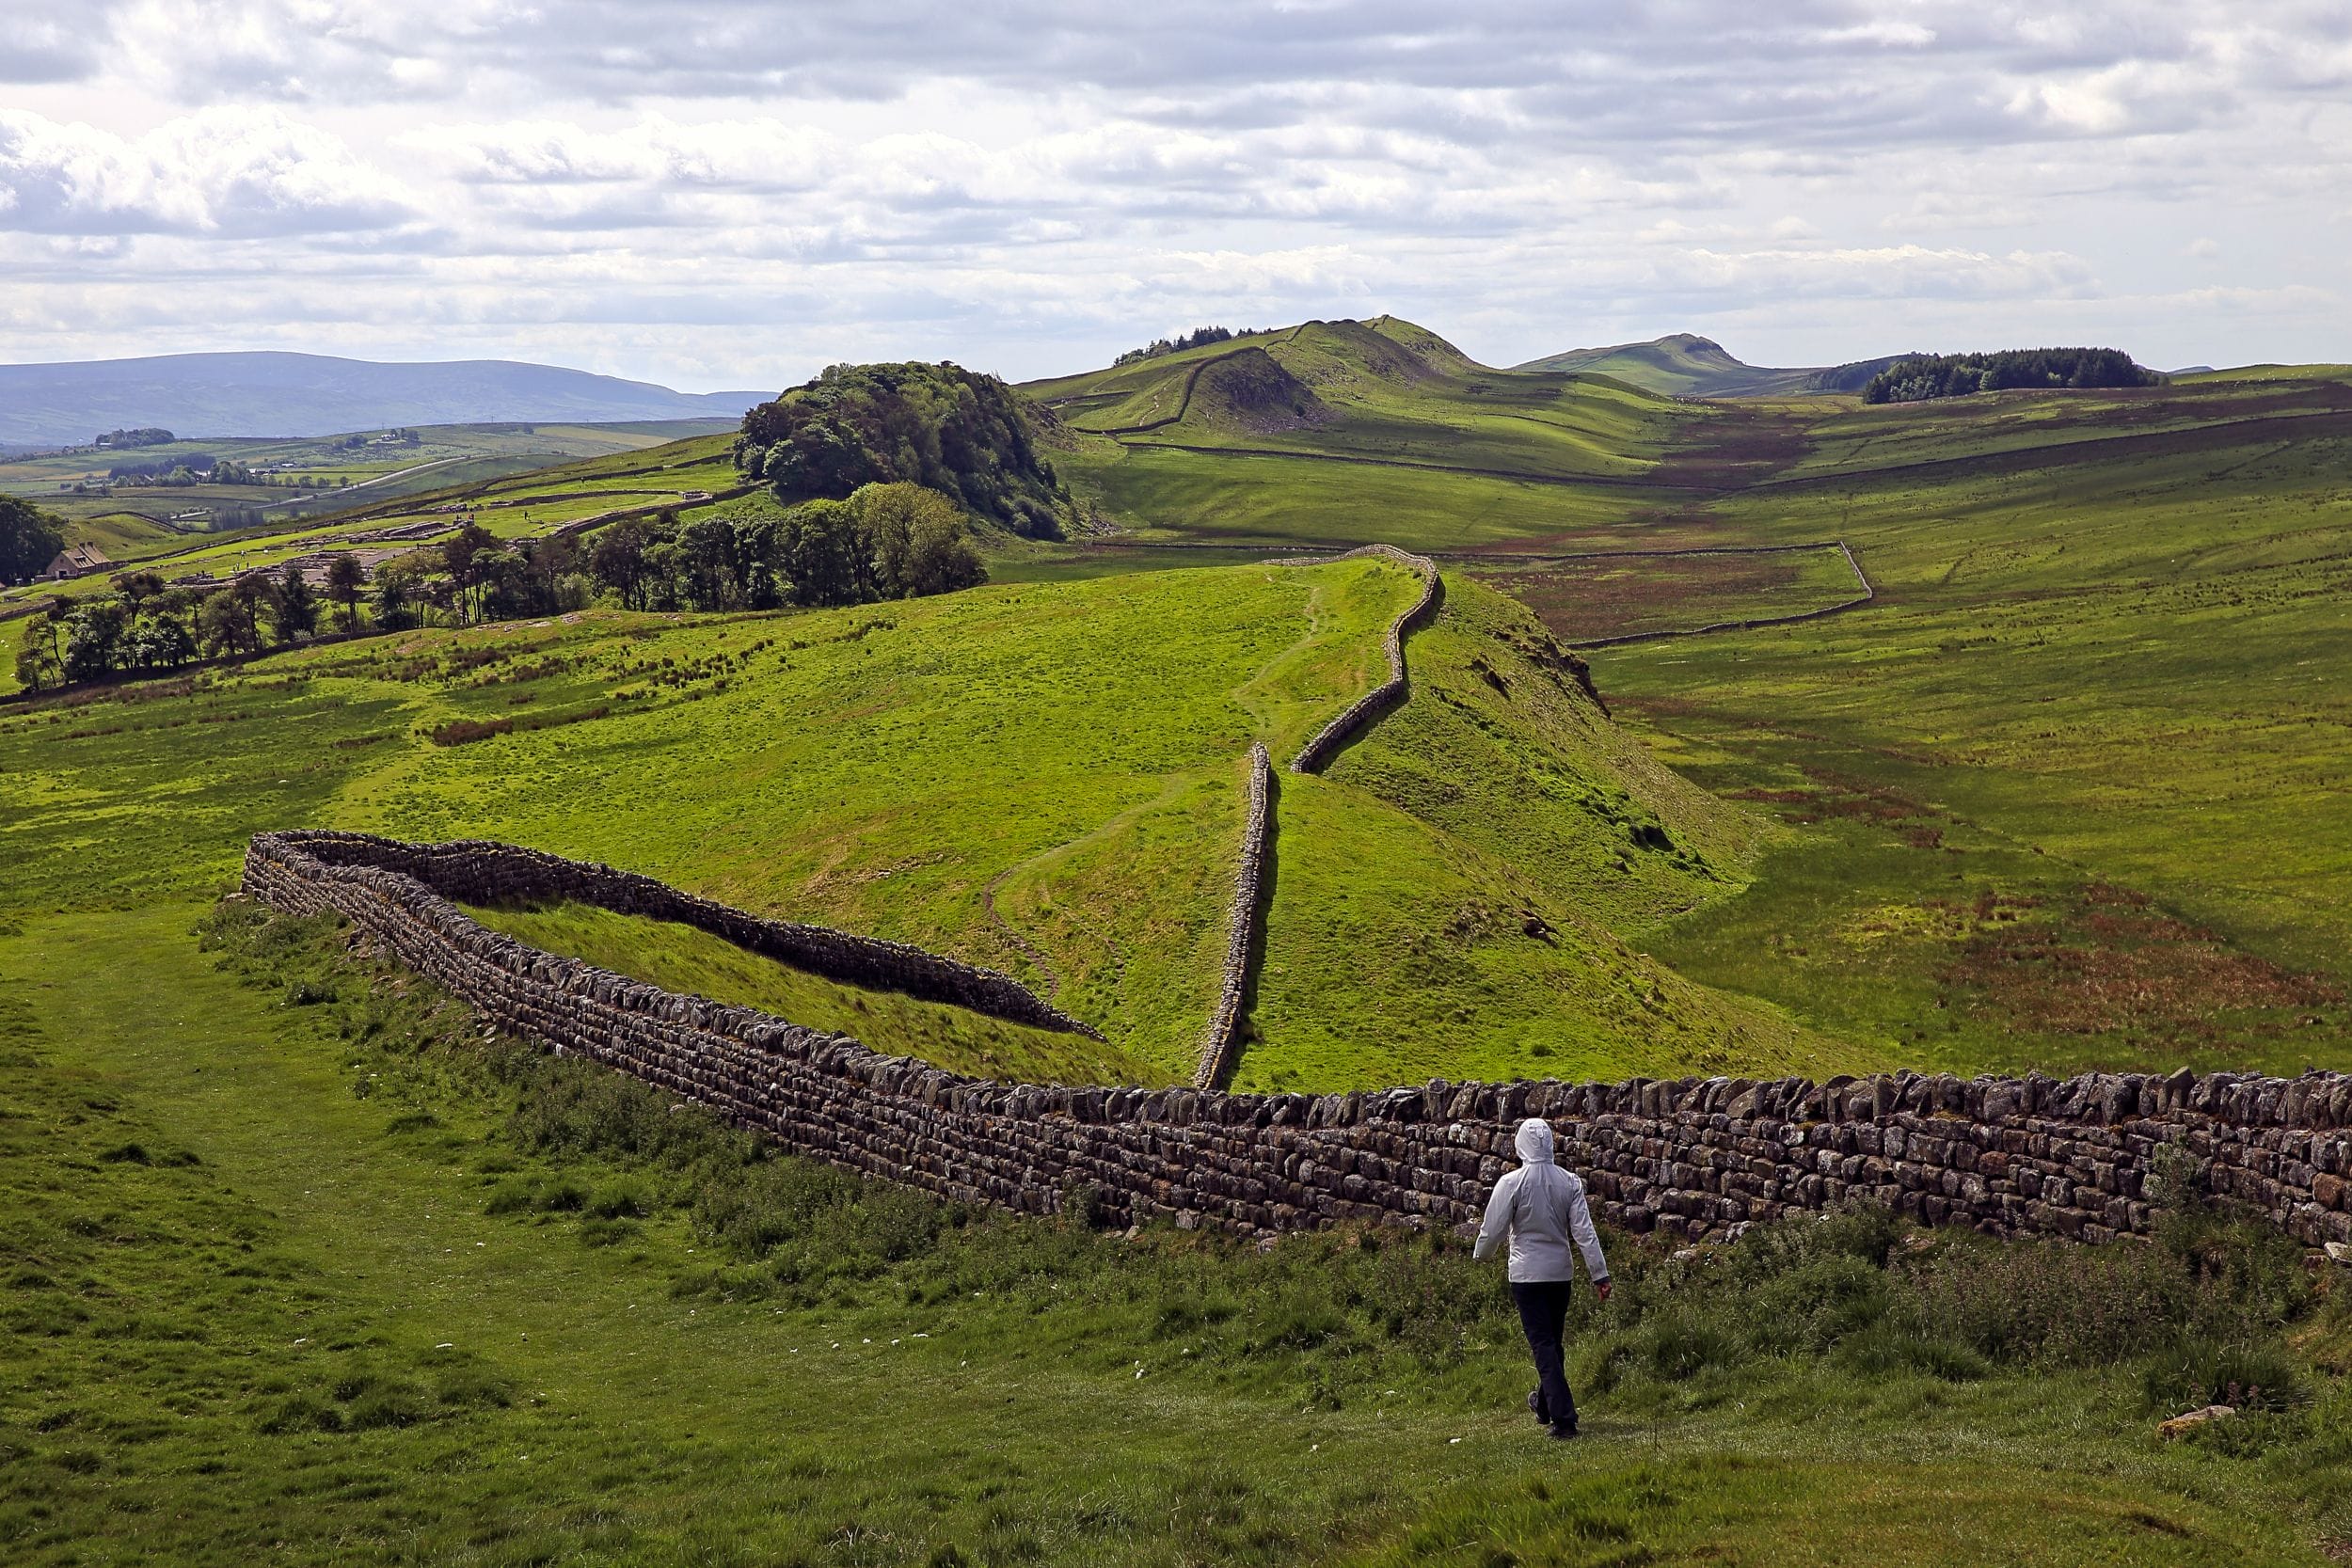 Hiking the Hadrian's Wall Path